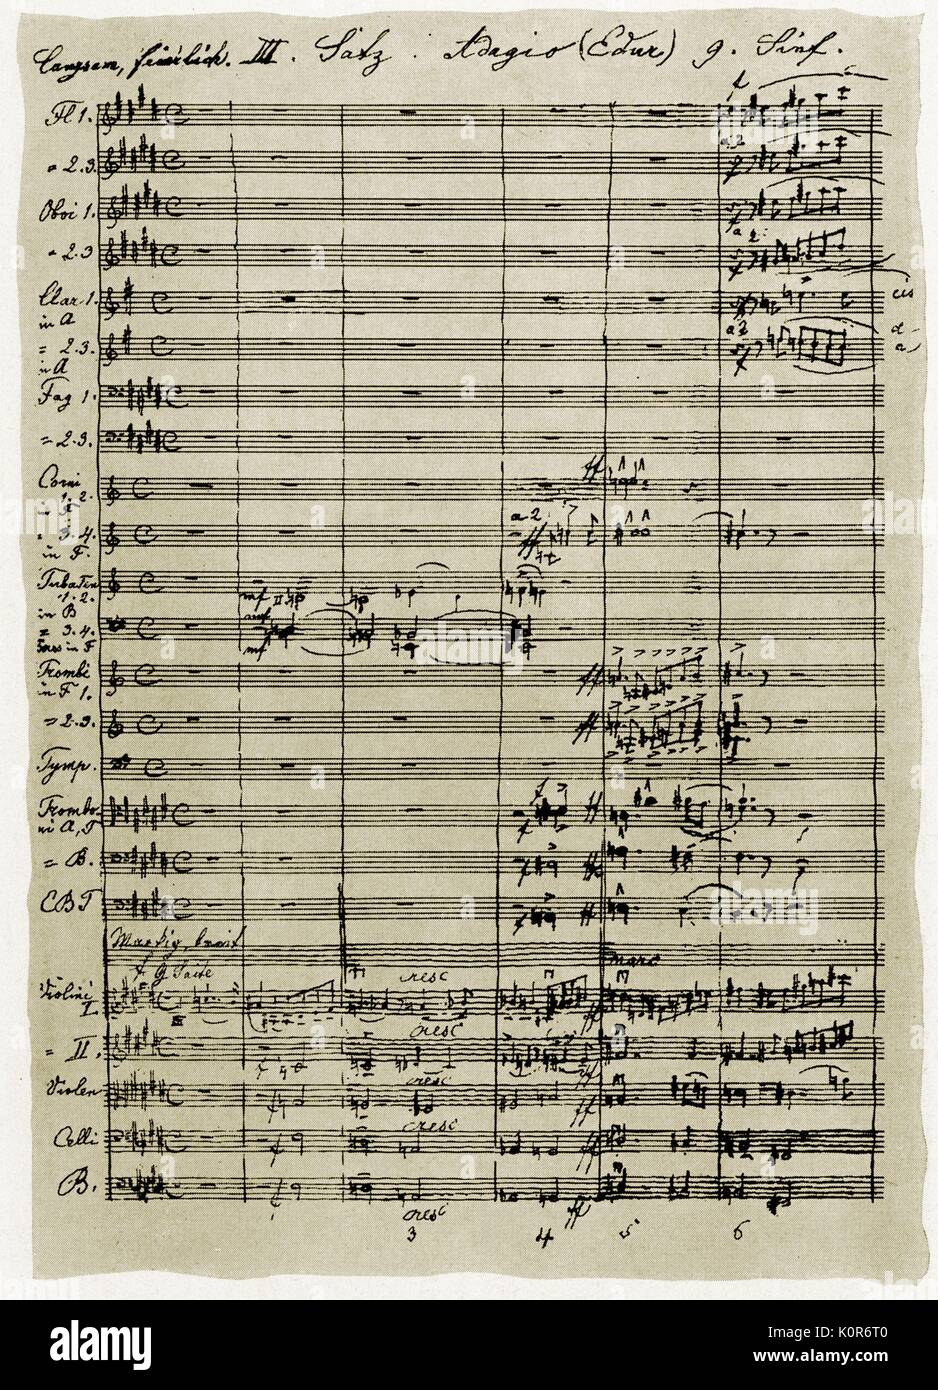 Bruckner,Anton  - 9th Symphony, begnning of Adagio.  1824-18965. Austrian composer & organist Stock Photo